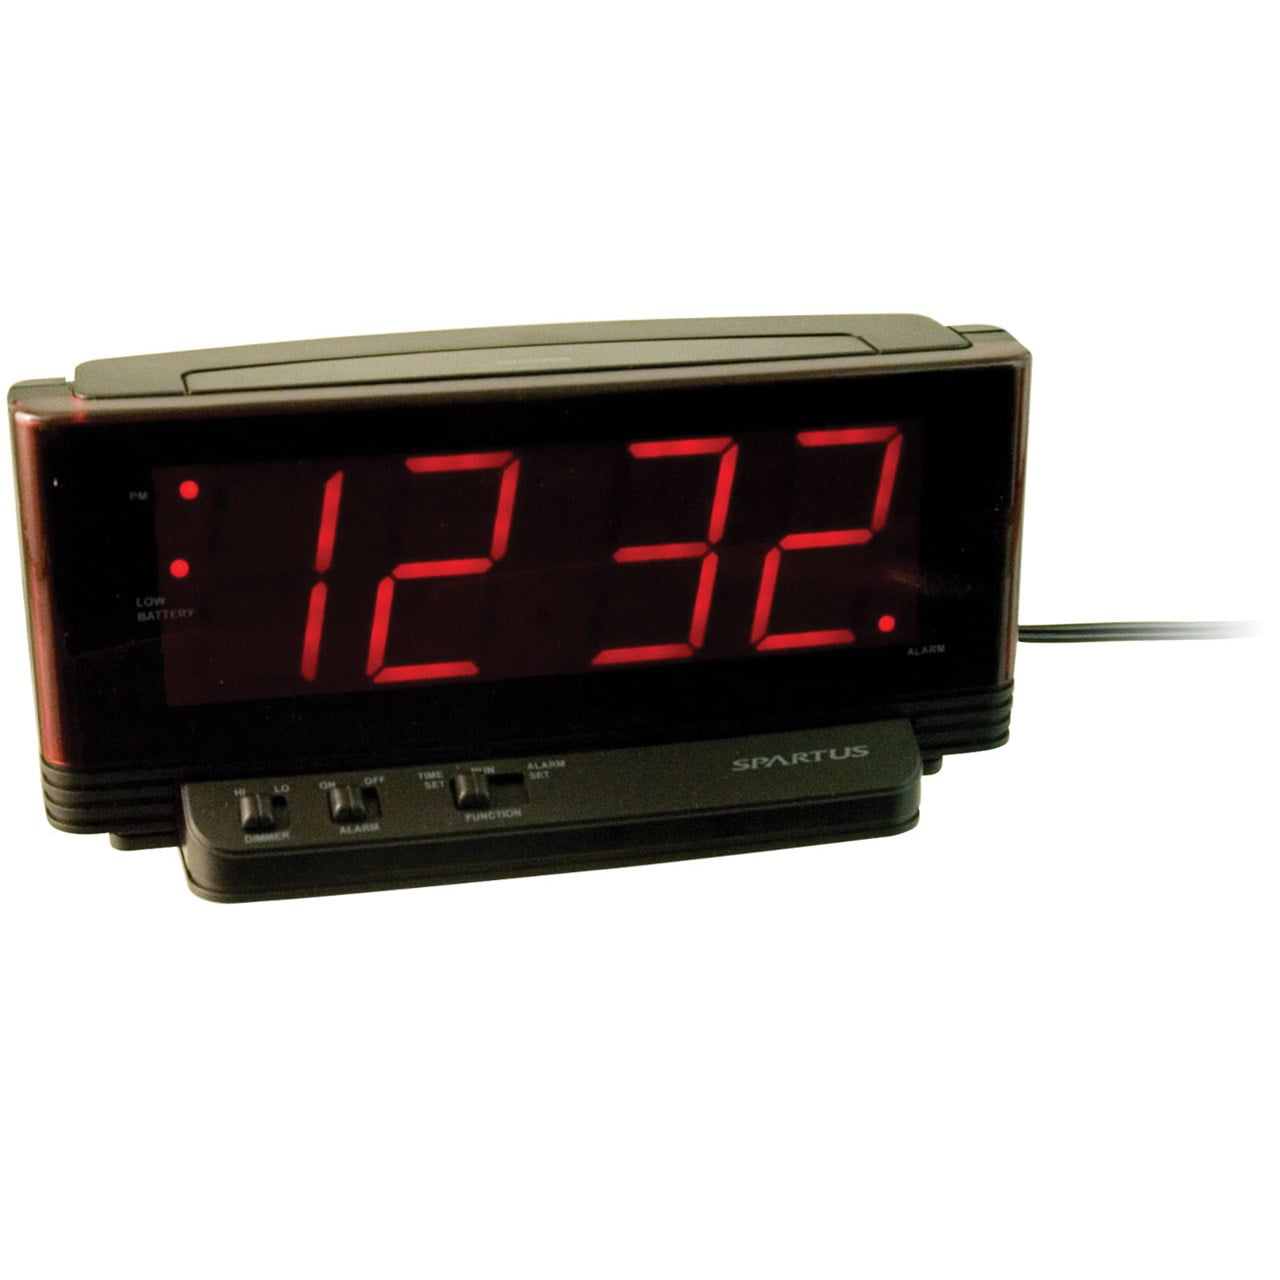 Details about   Vintage Spartus Digital Alarm Clock Model 1119 Jumbo Numbers 